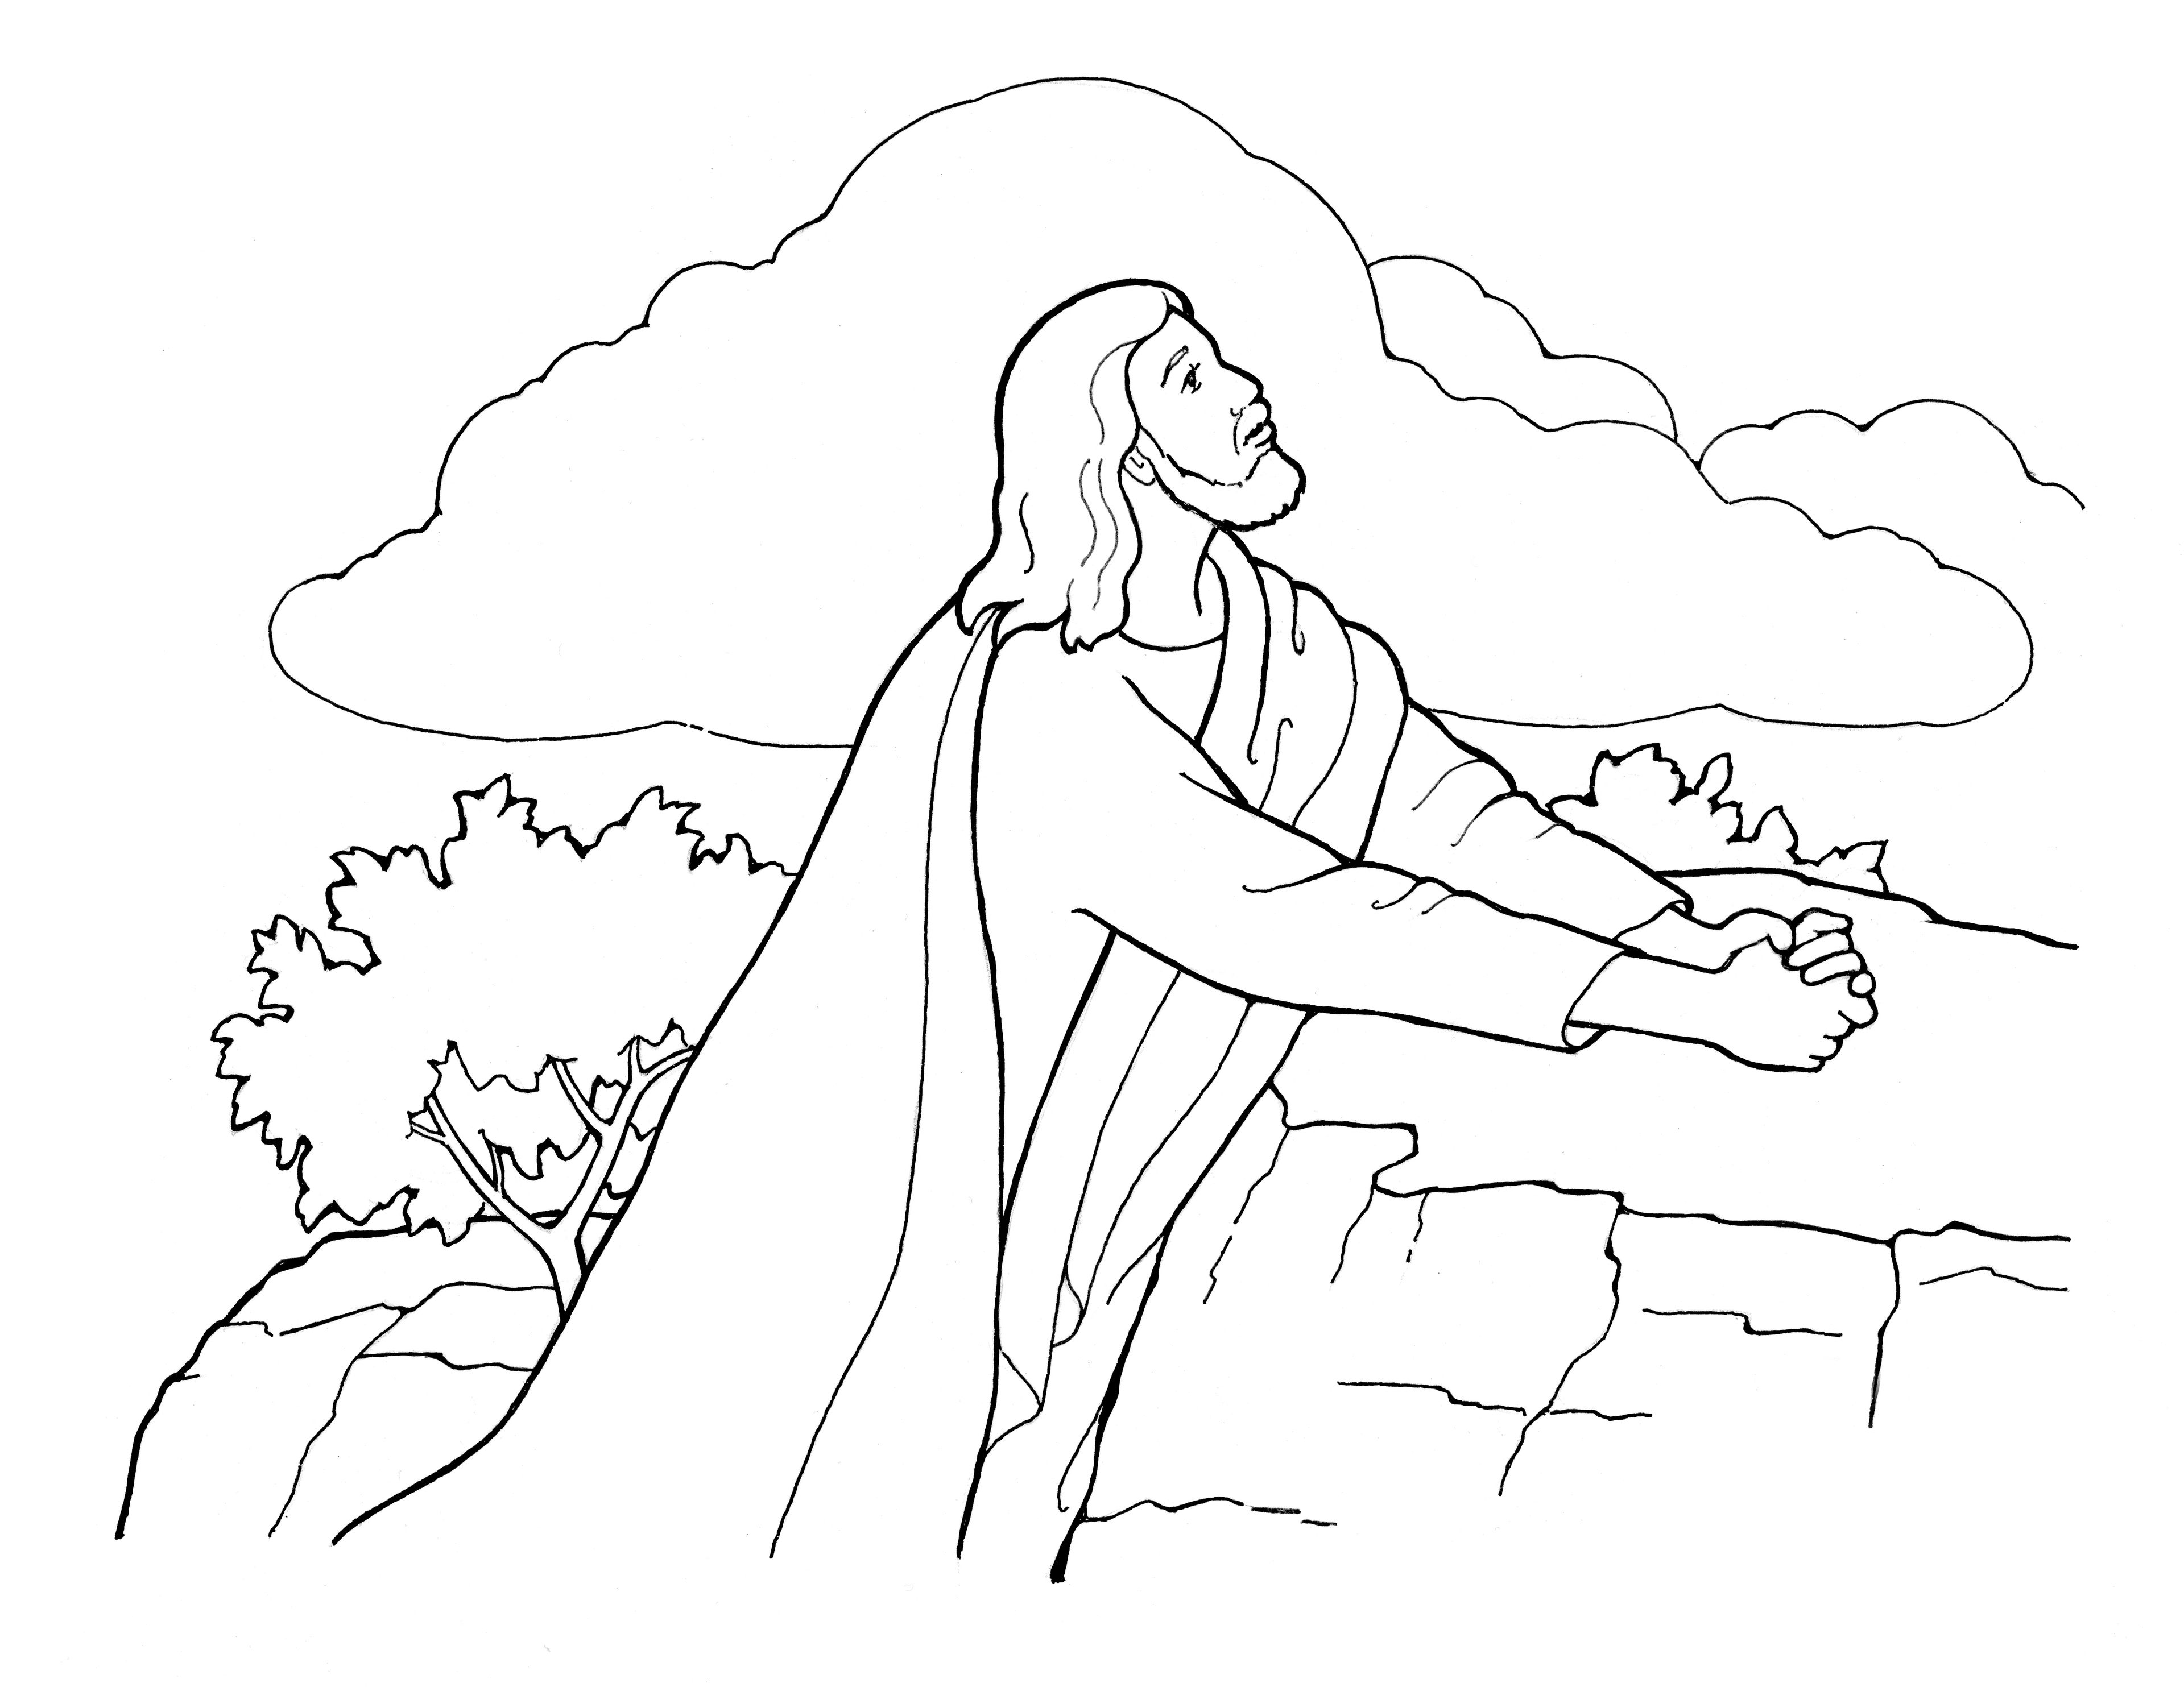 An illustration of Jesus Christ praying in the Garden of Gethsemane.